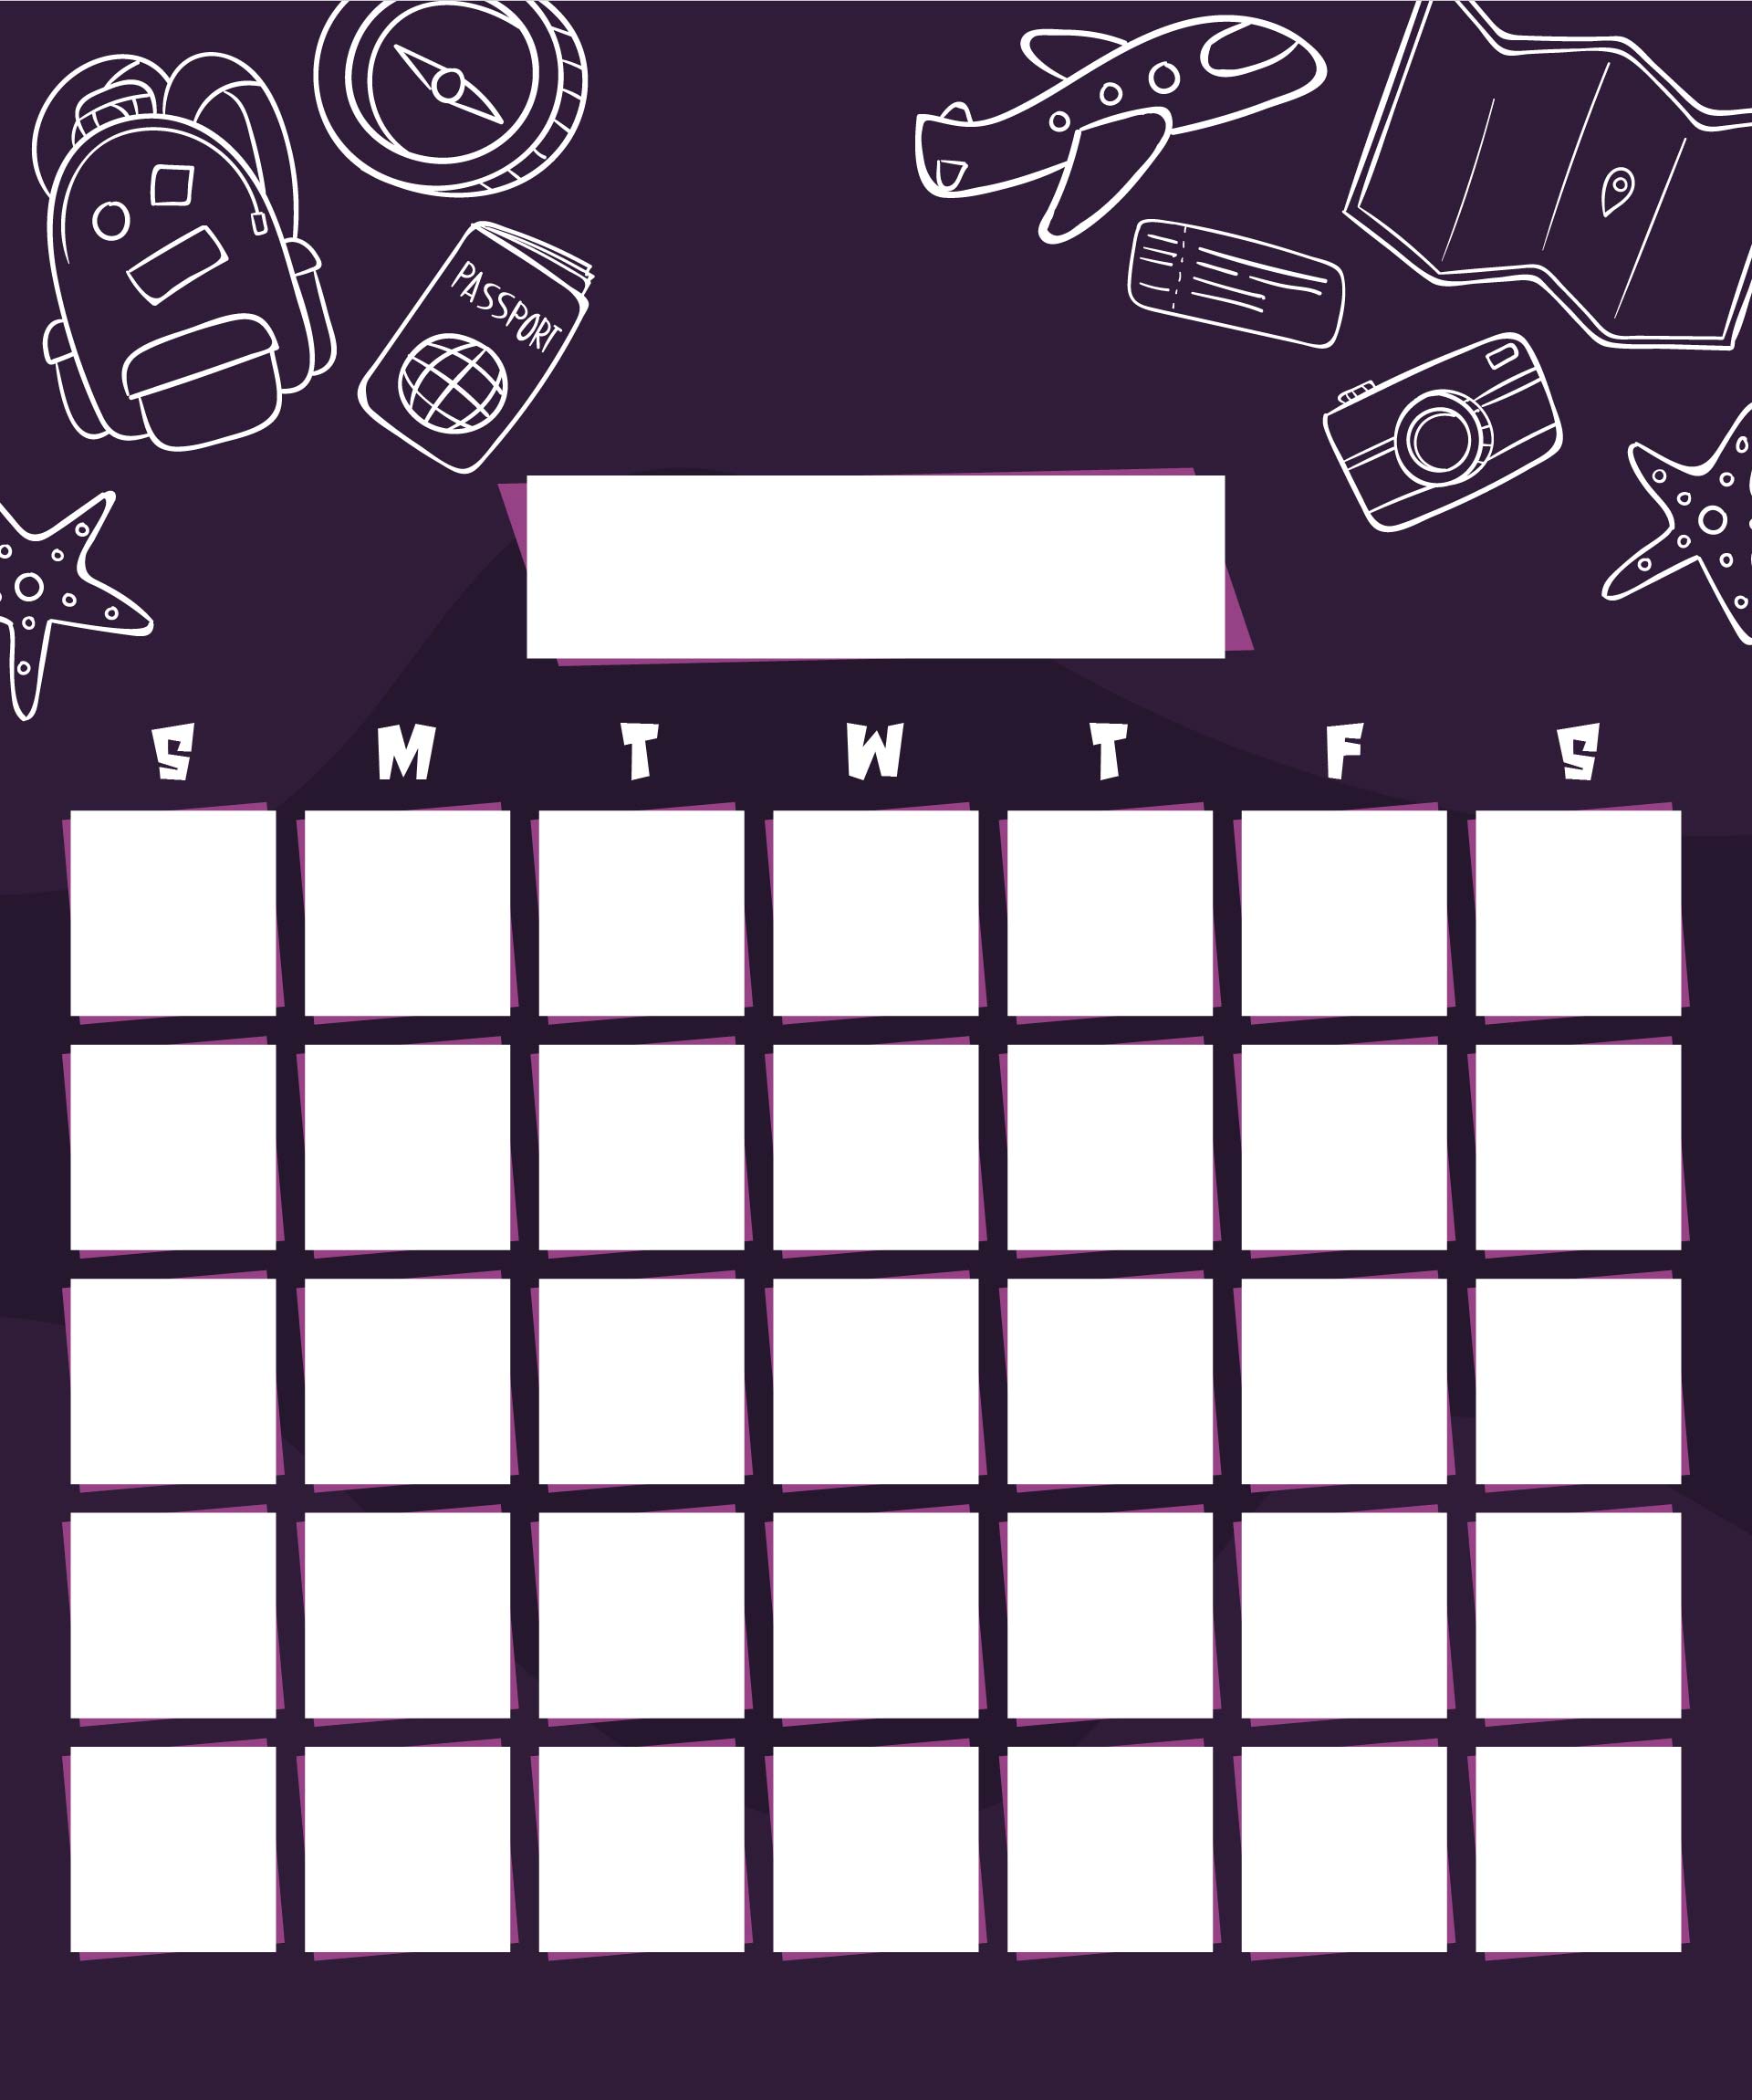 7 day blank calendar printable 97